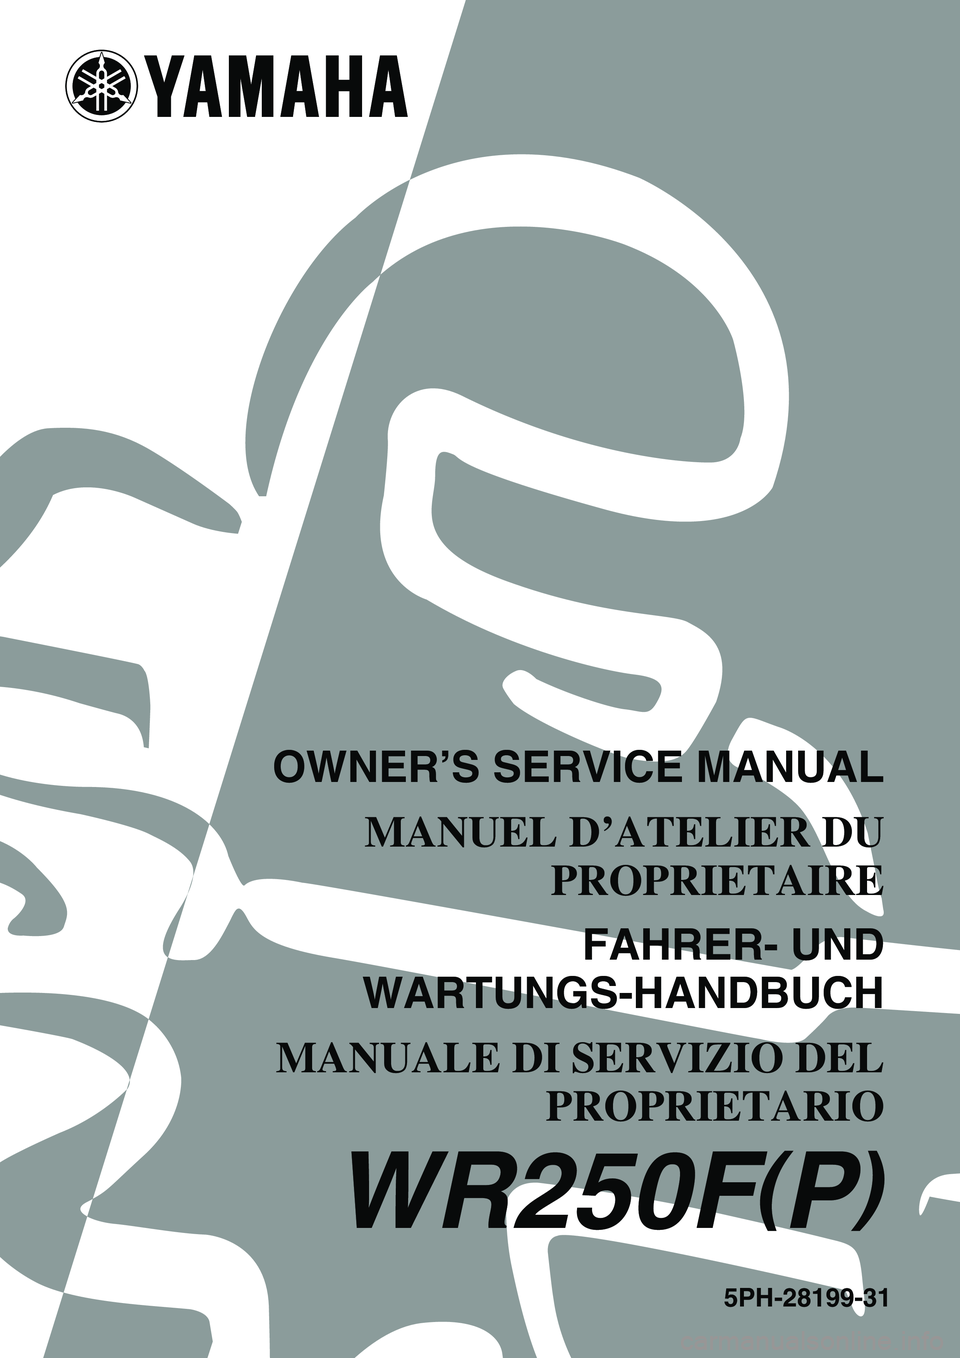 YAMAHA WR 250F 2002  Manuale duso (in Italian) 5PH-28199-31
WR250F(P)
OWNER’S SERVICE MANUAL
MANUEL D’ATELIER DU
PROPRIETAIRE
FAHRER- UND
WARTUNGS-HANDBUCH
MANUALE DI SERVIZIO DEL
PROPRIETARIO 